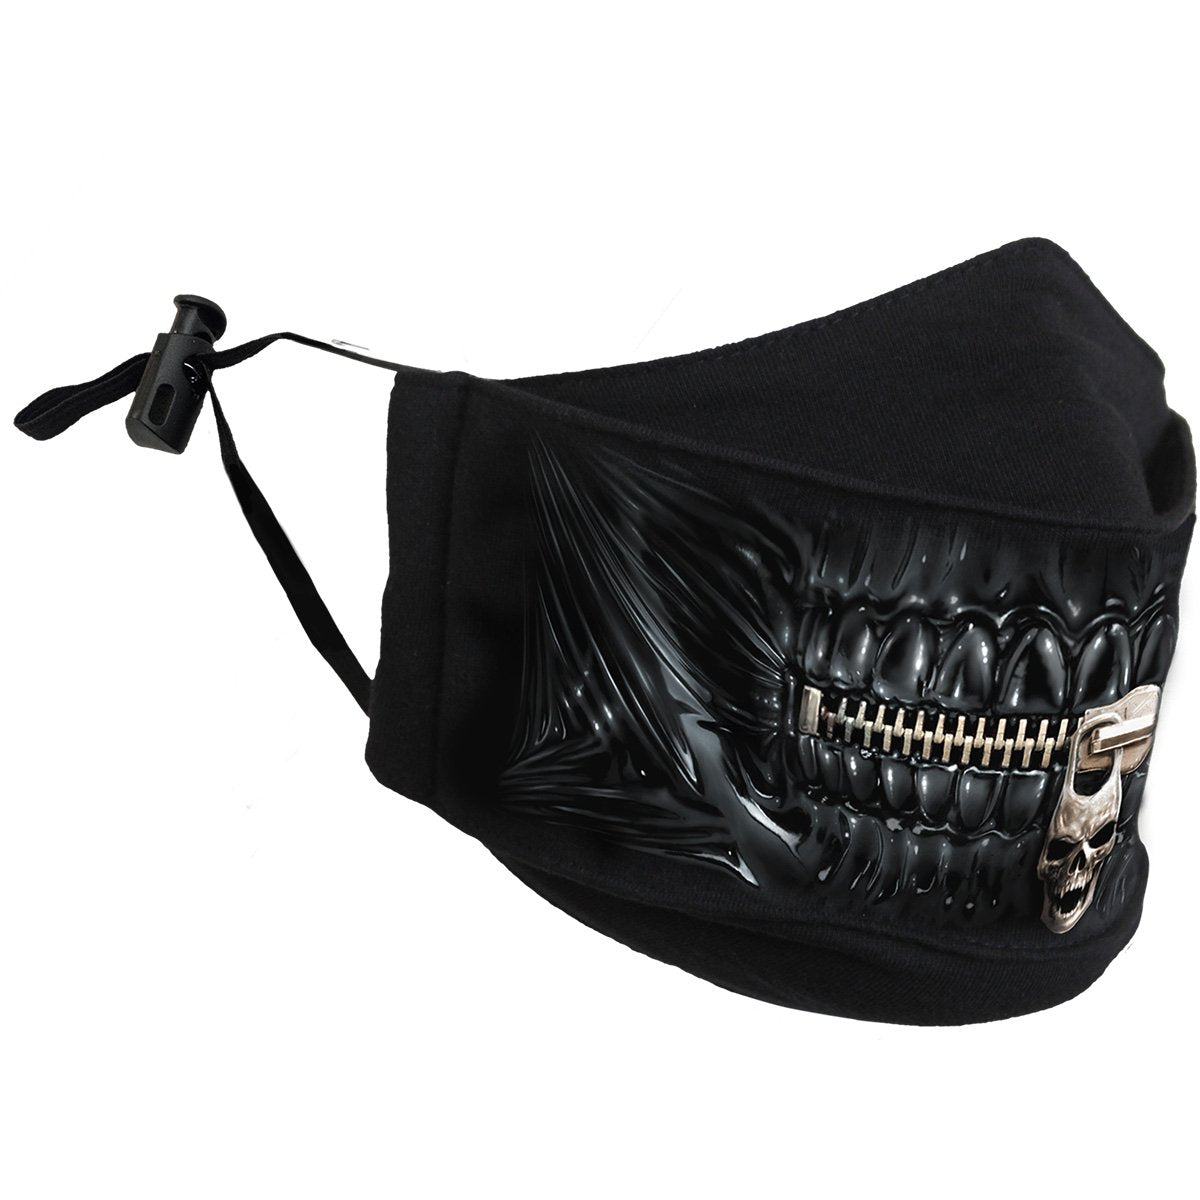 unsiex gothic death skull mask with zipper design